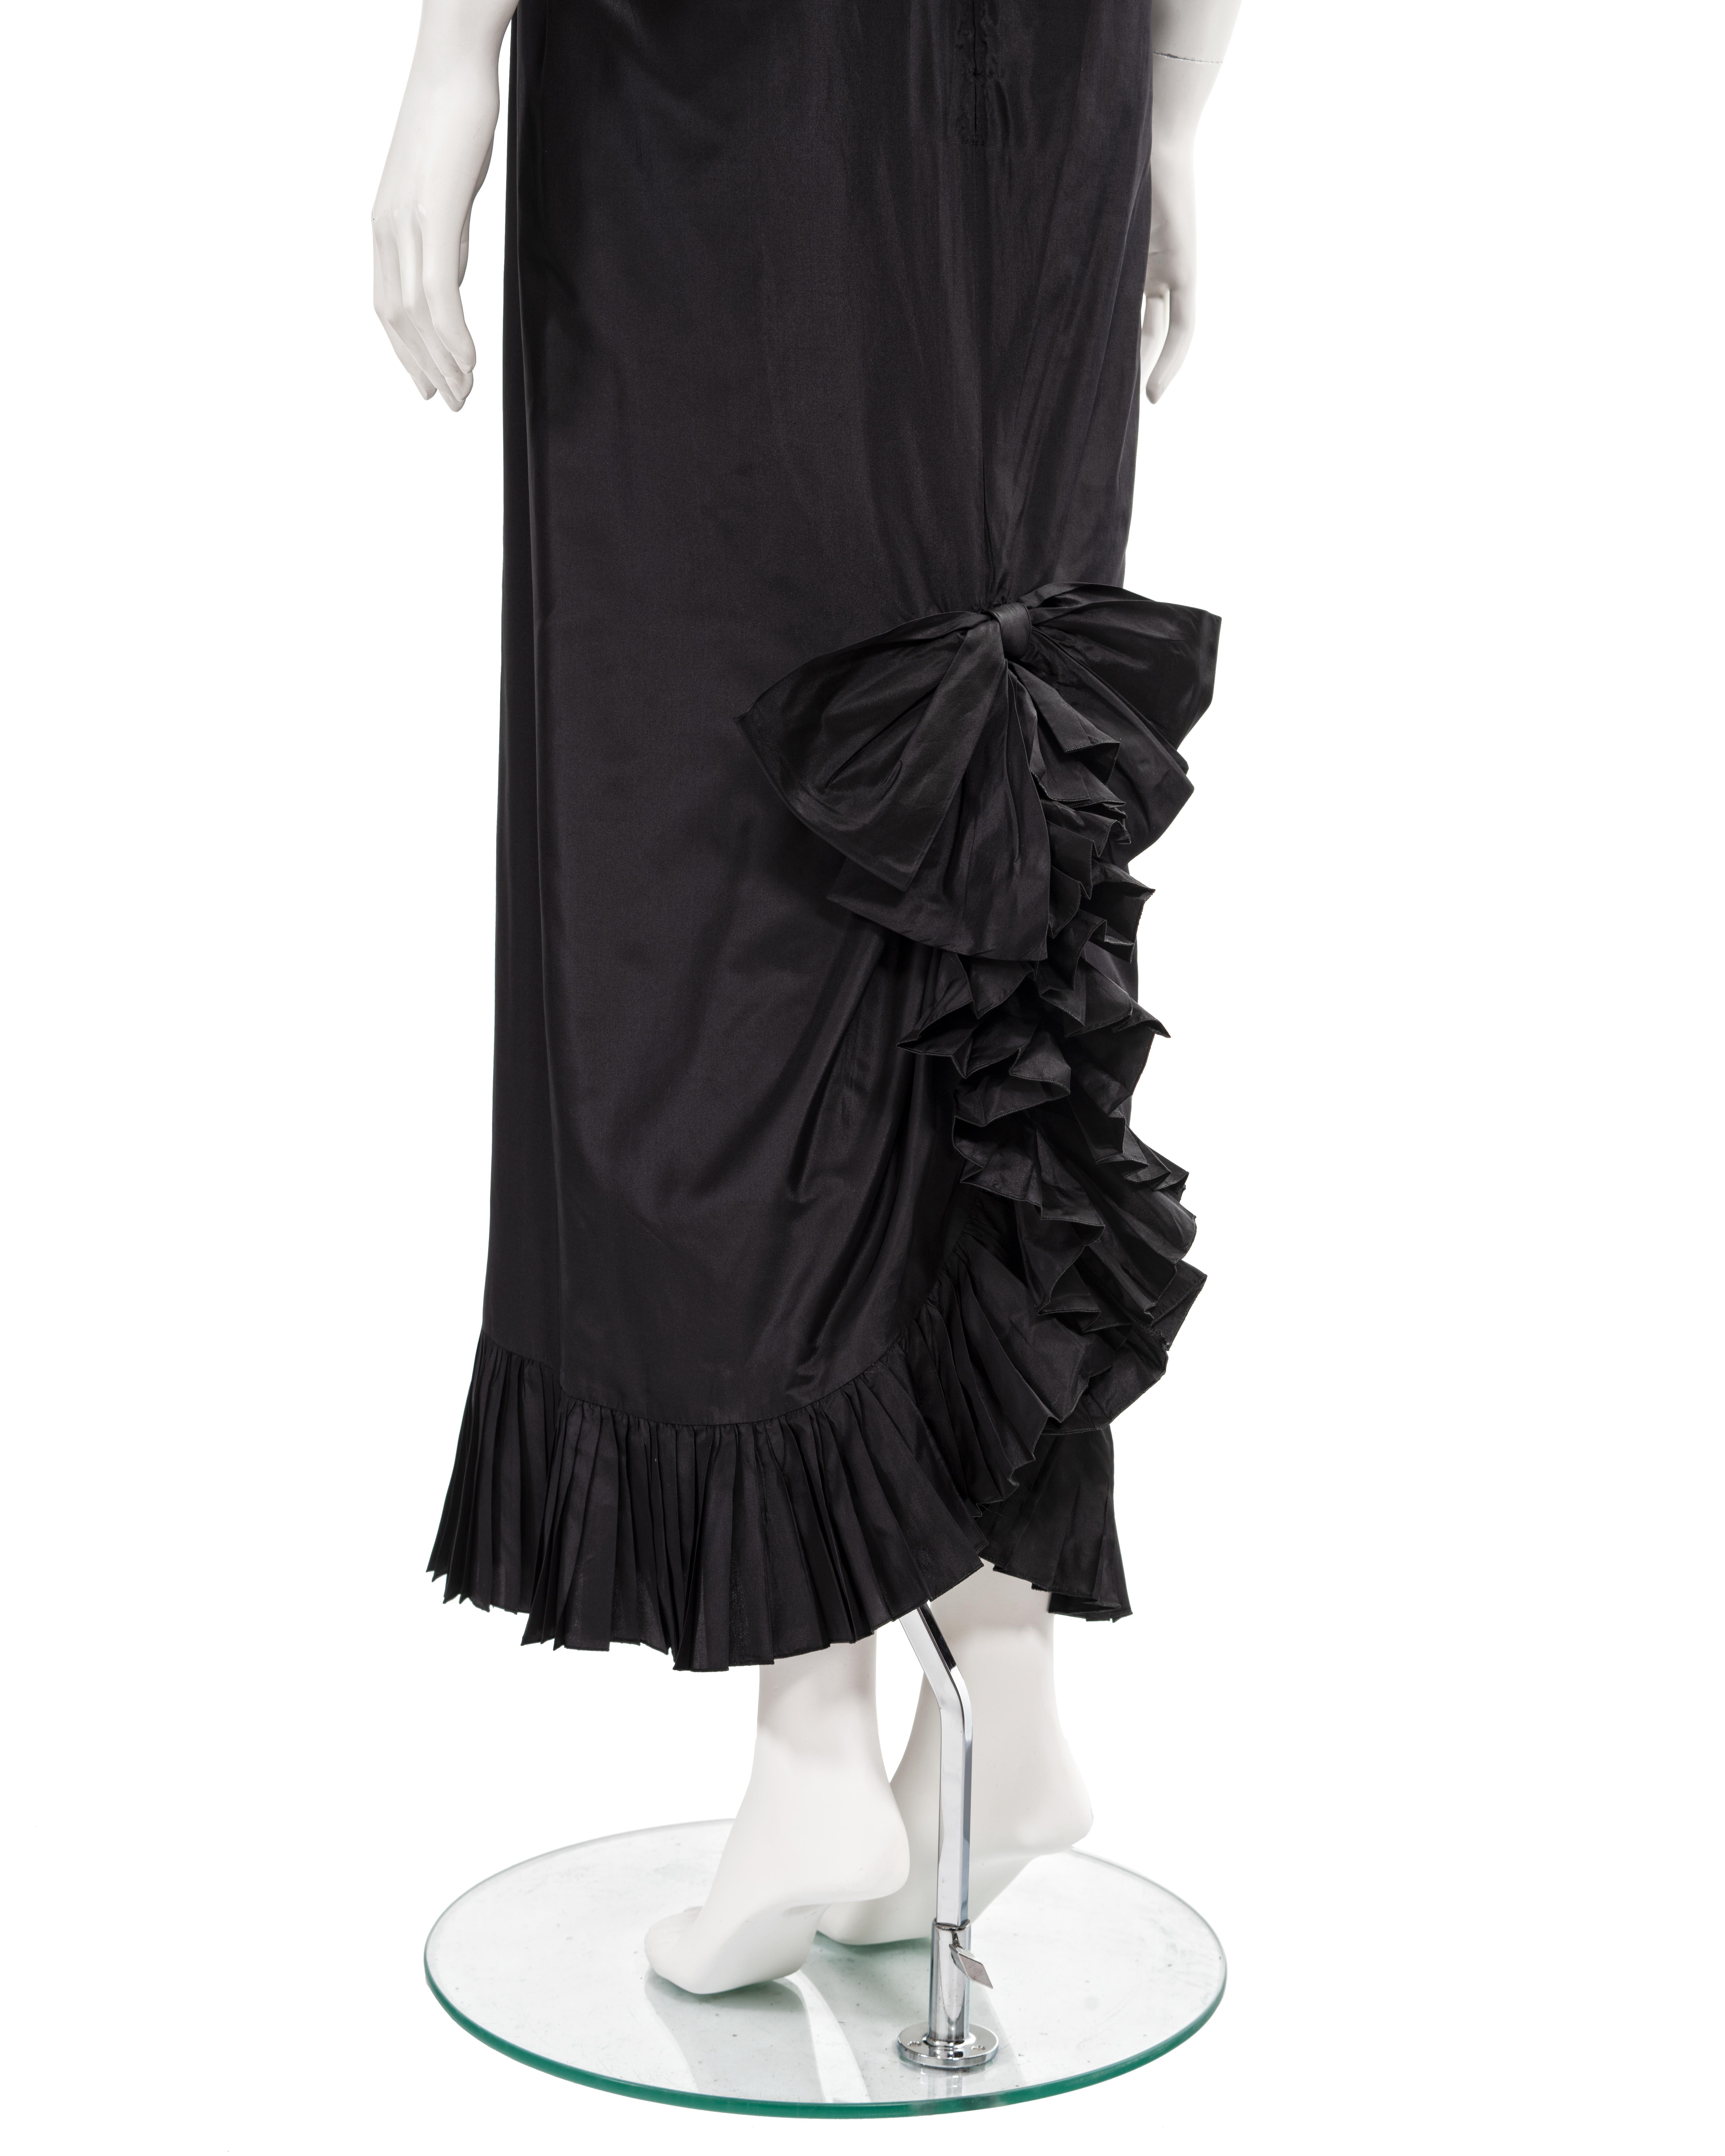 Chanel by Karl Lagerfeld black silk taffeta evening dress, ss 1986 For Sale 11